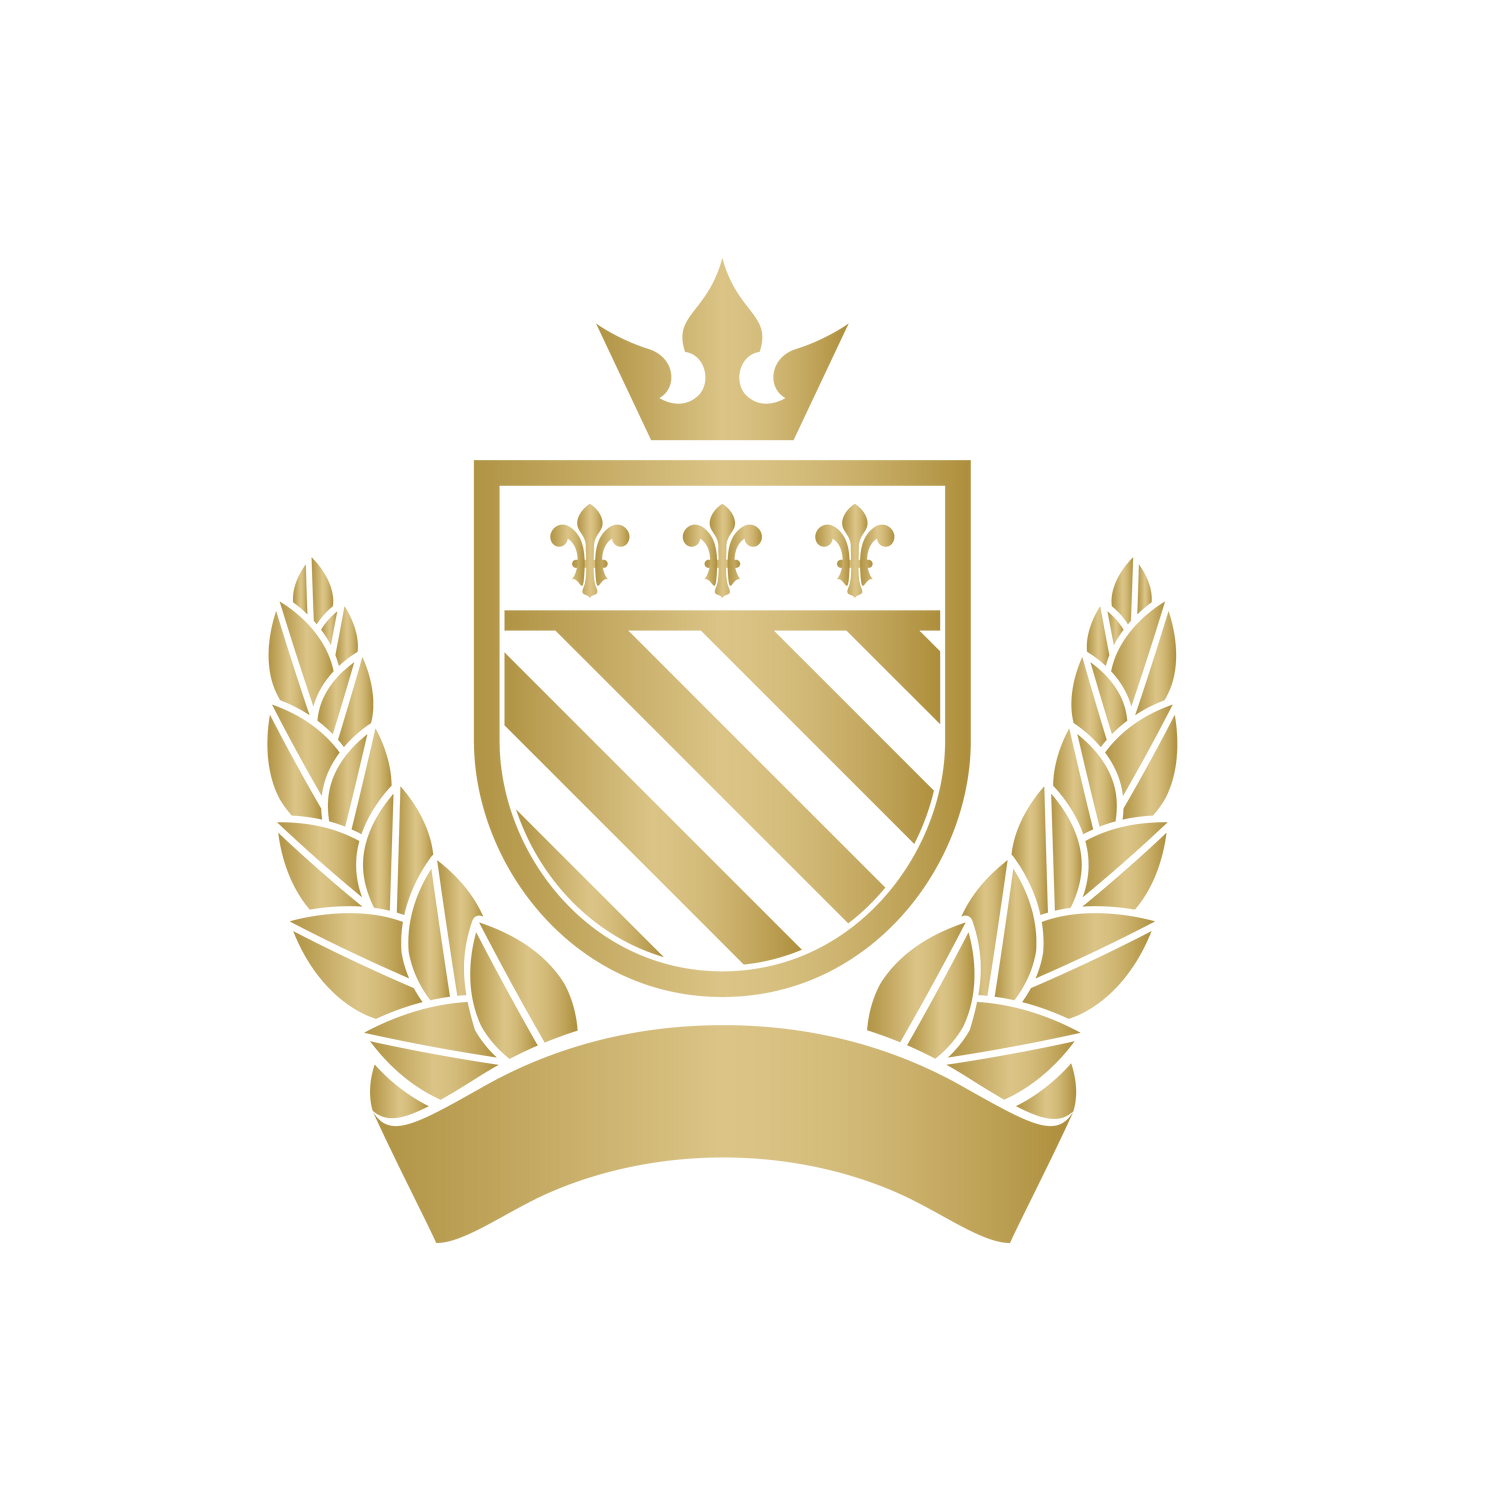 royal emblem with lion, laurel wreath, and ribbon